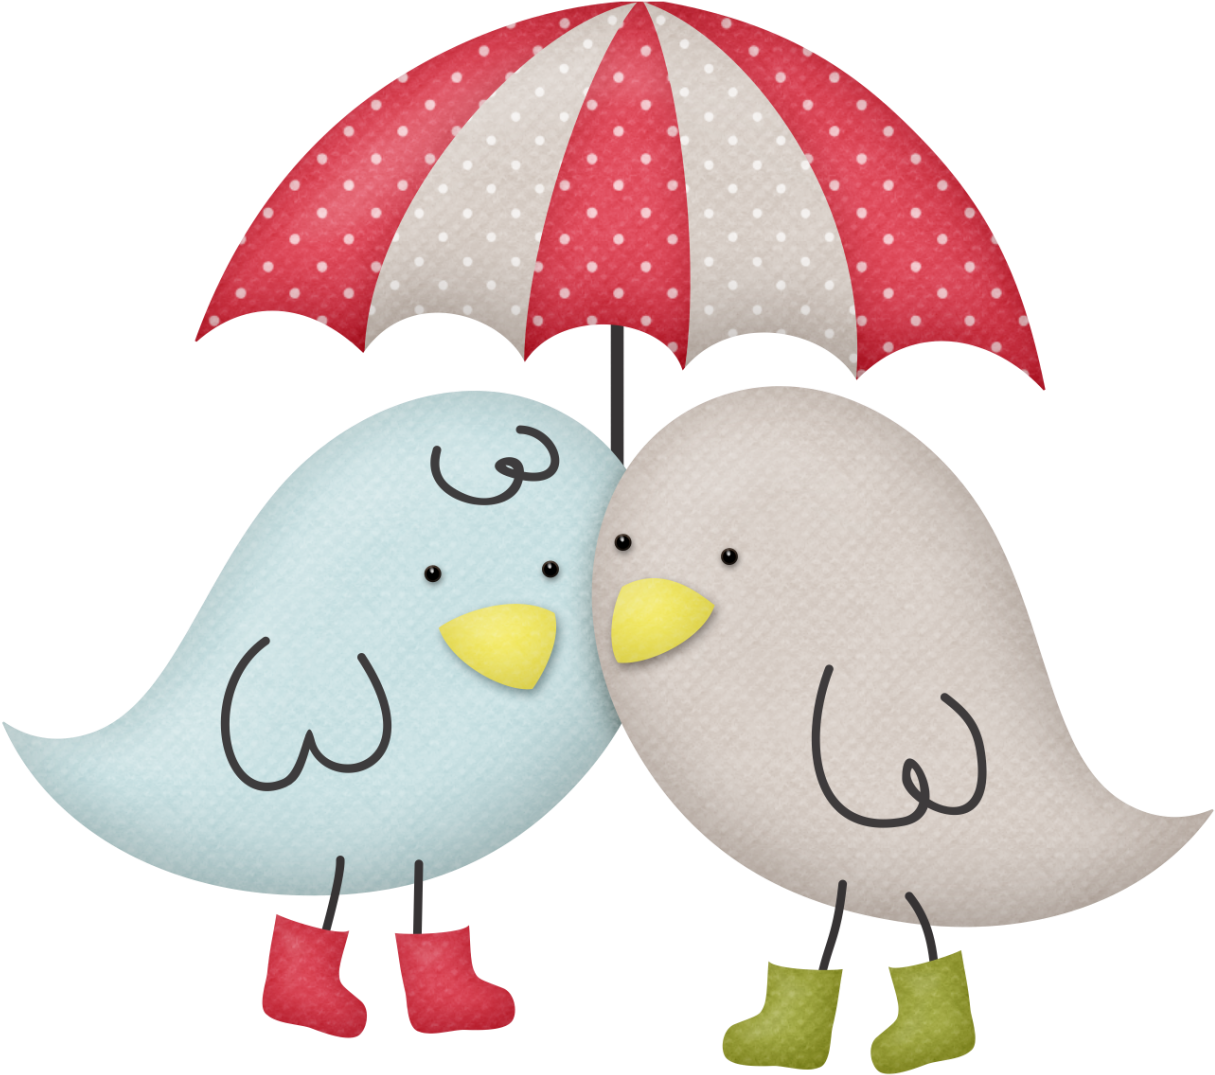 Birds With Umbrella - Bird With Umbrella Clipart (1280x1140)